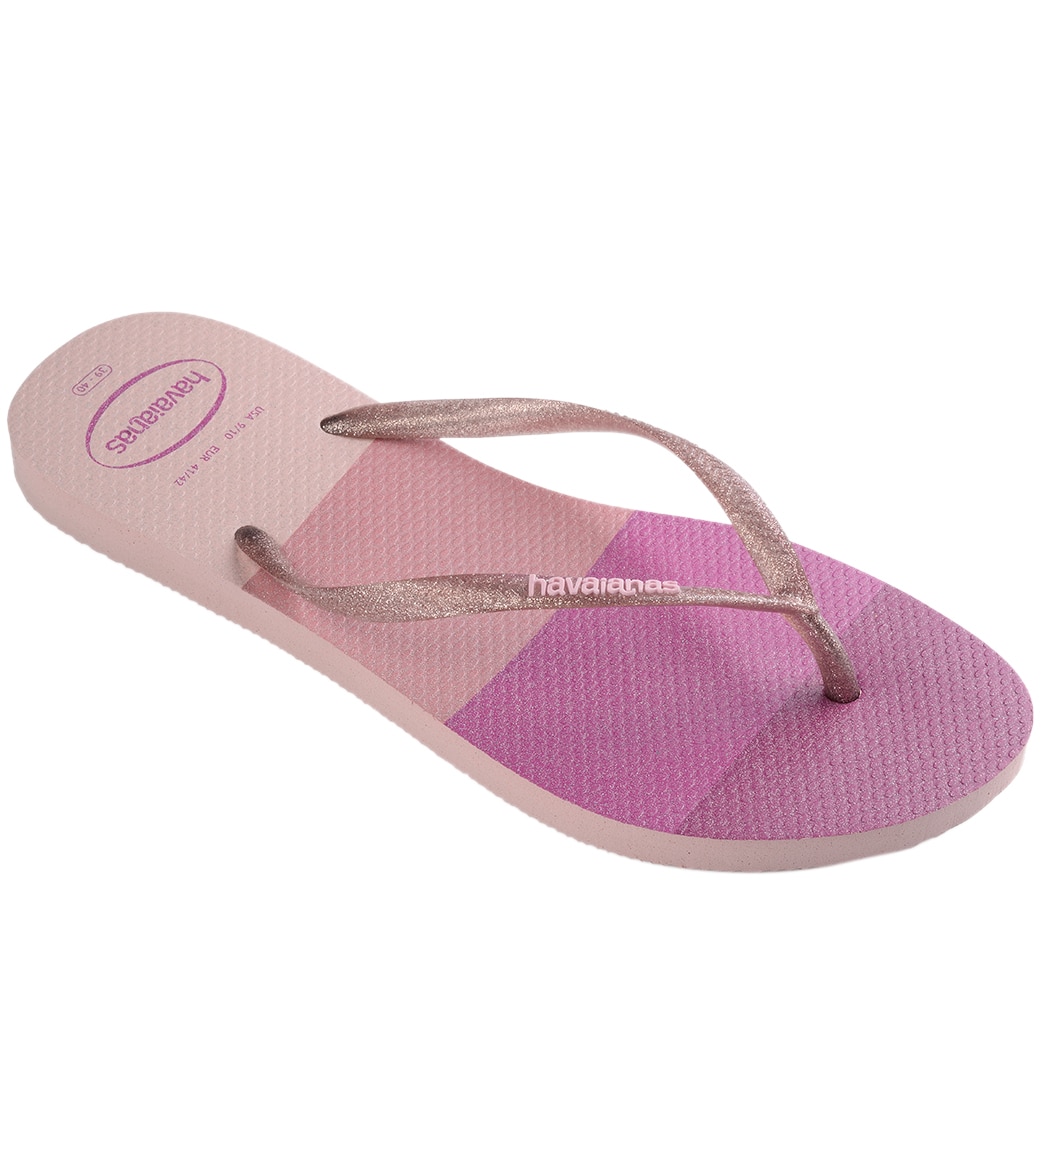 Havaianas Slim Palette Glow Sandals - Candy Pink 35/36 - Swimoutlet.com